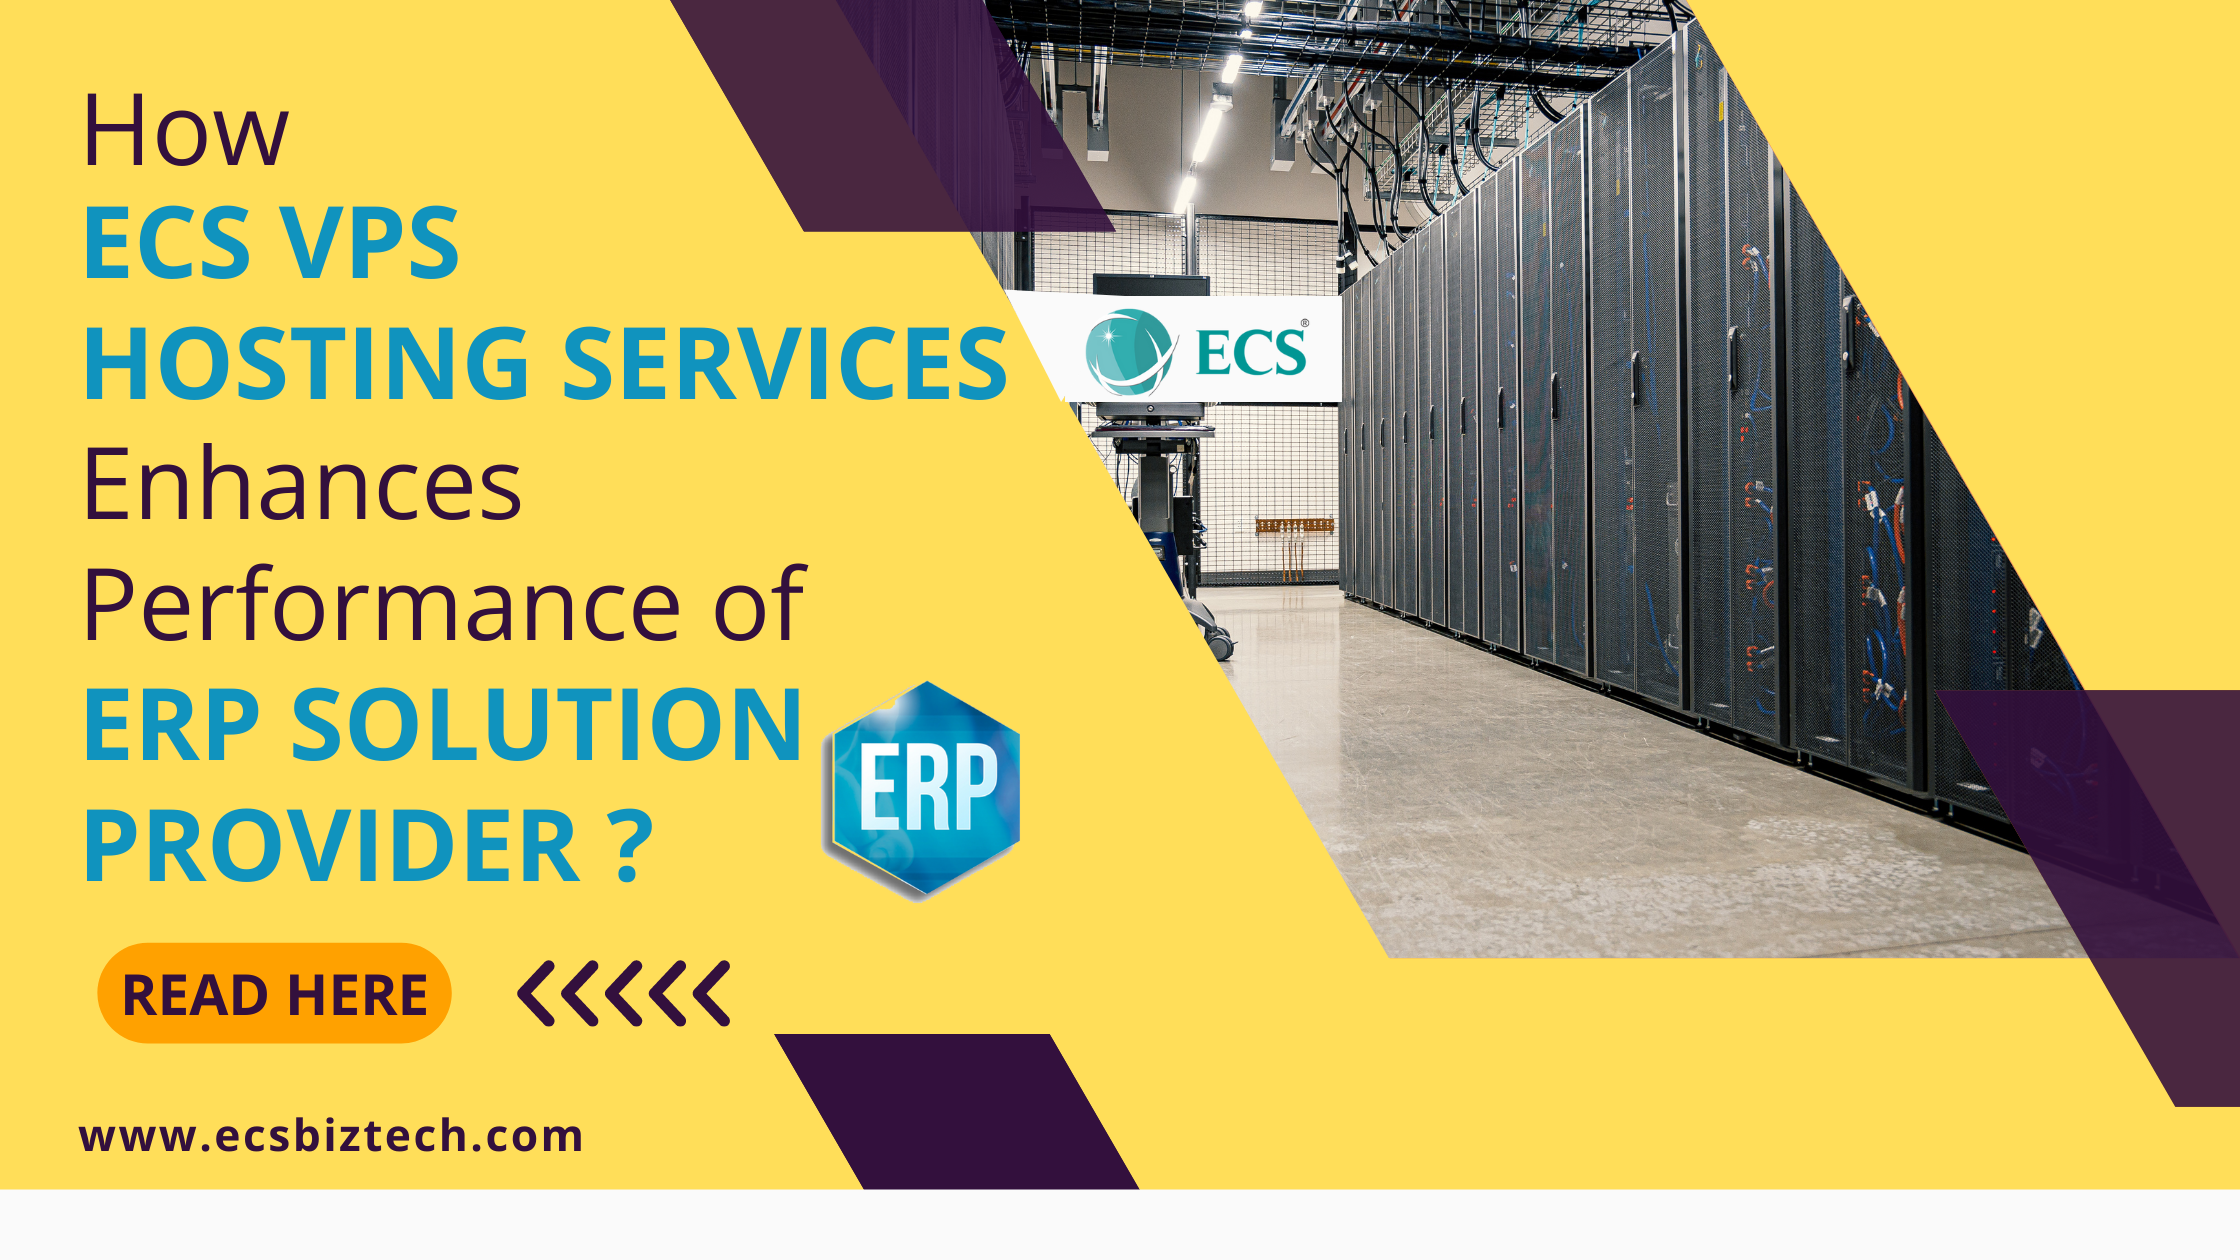 How ECS VPS Hosting Services Enhances Performance of ERP Solution Provider?